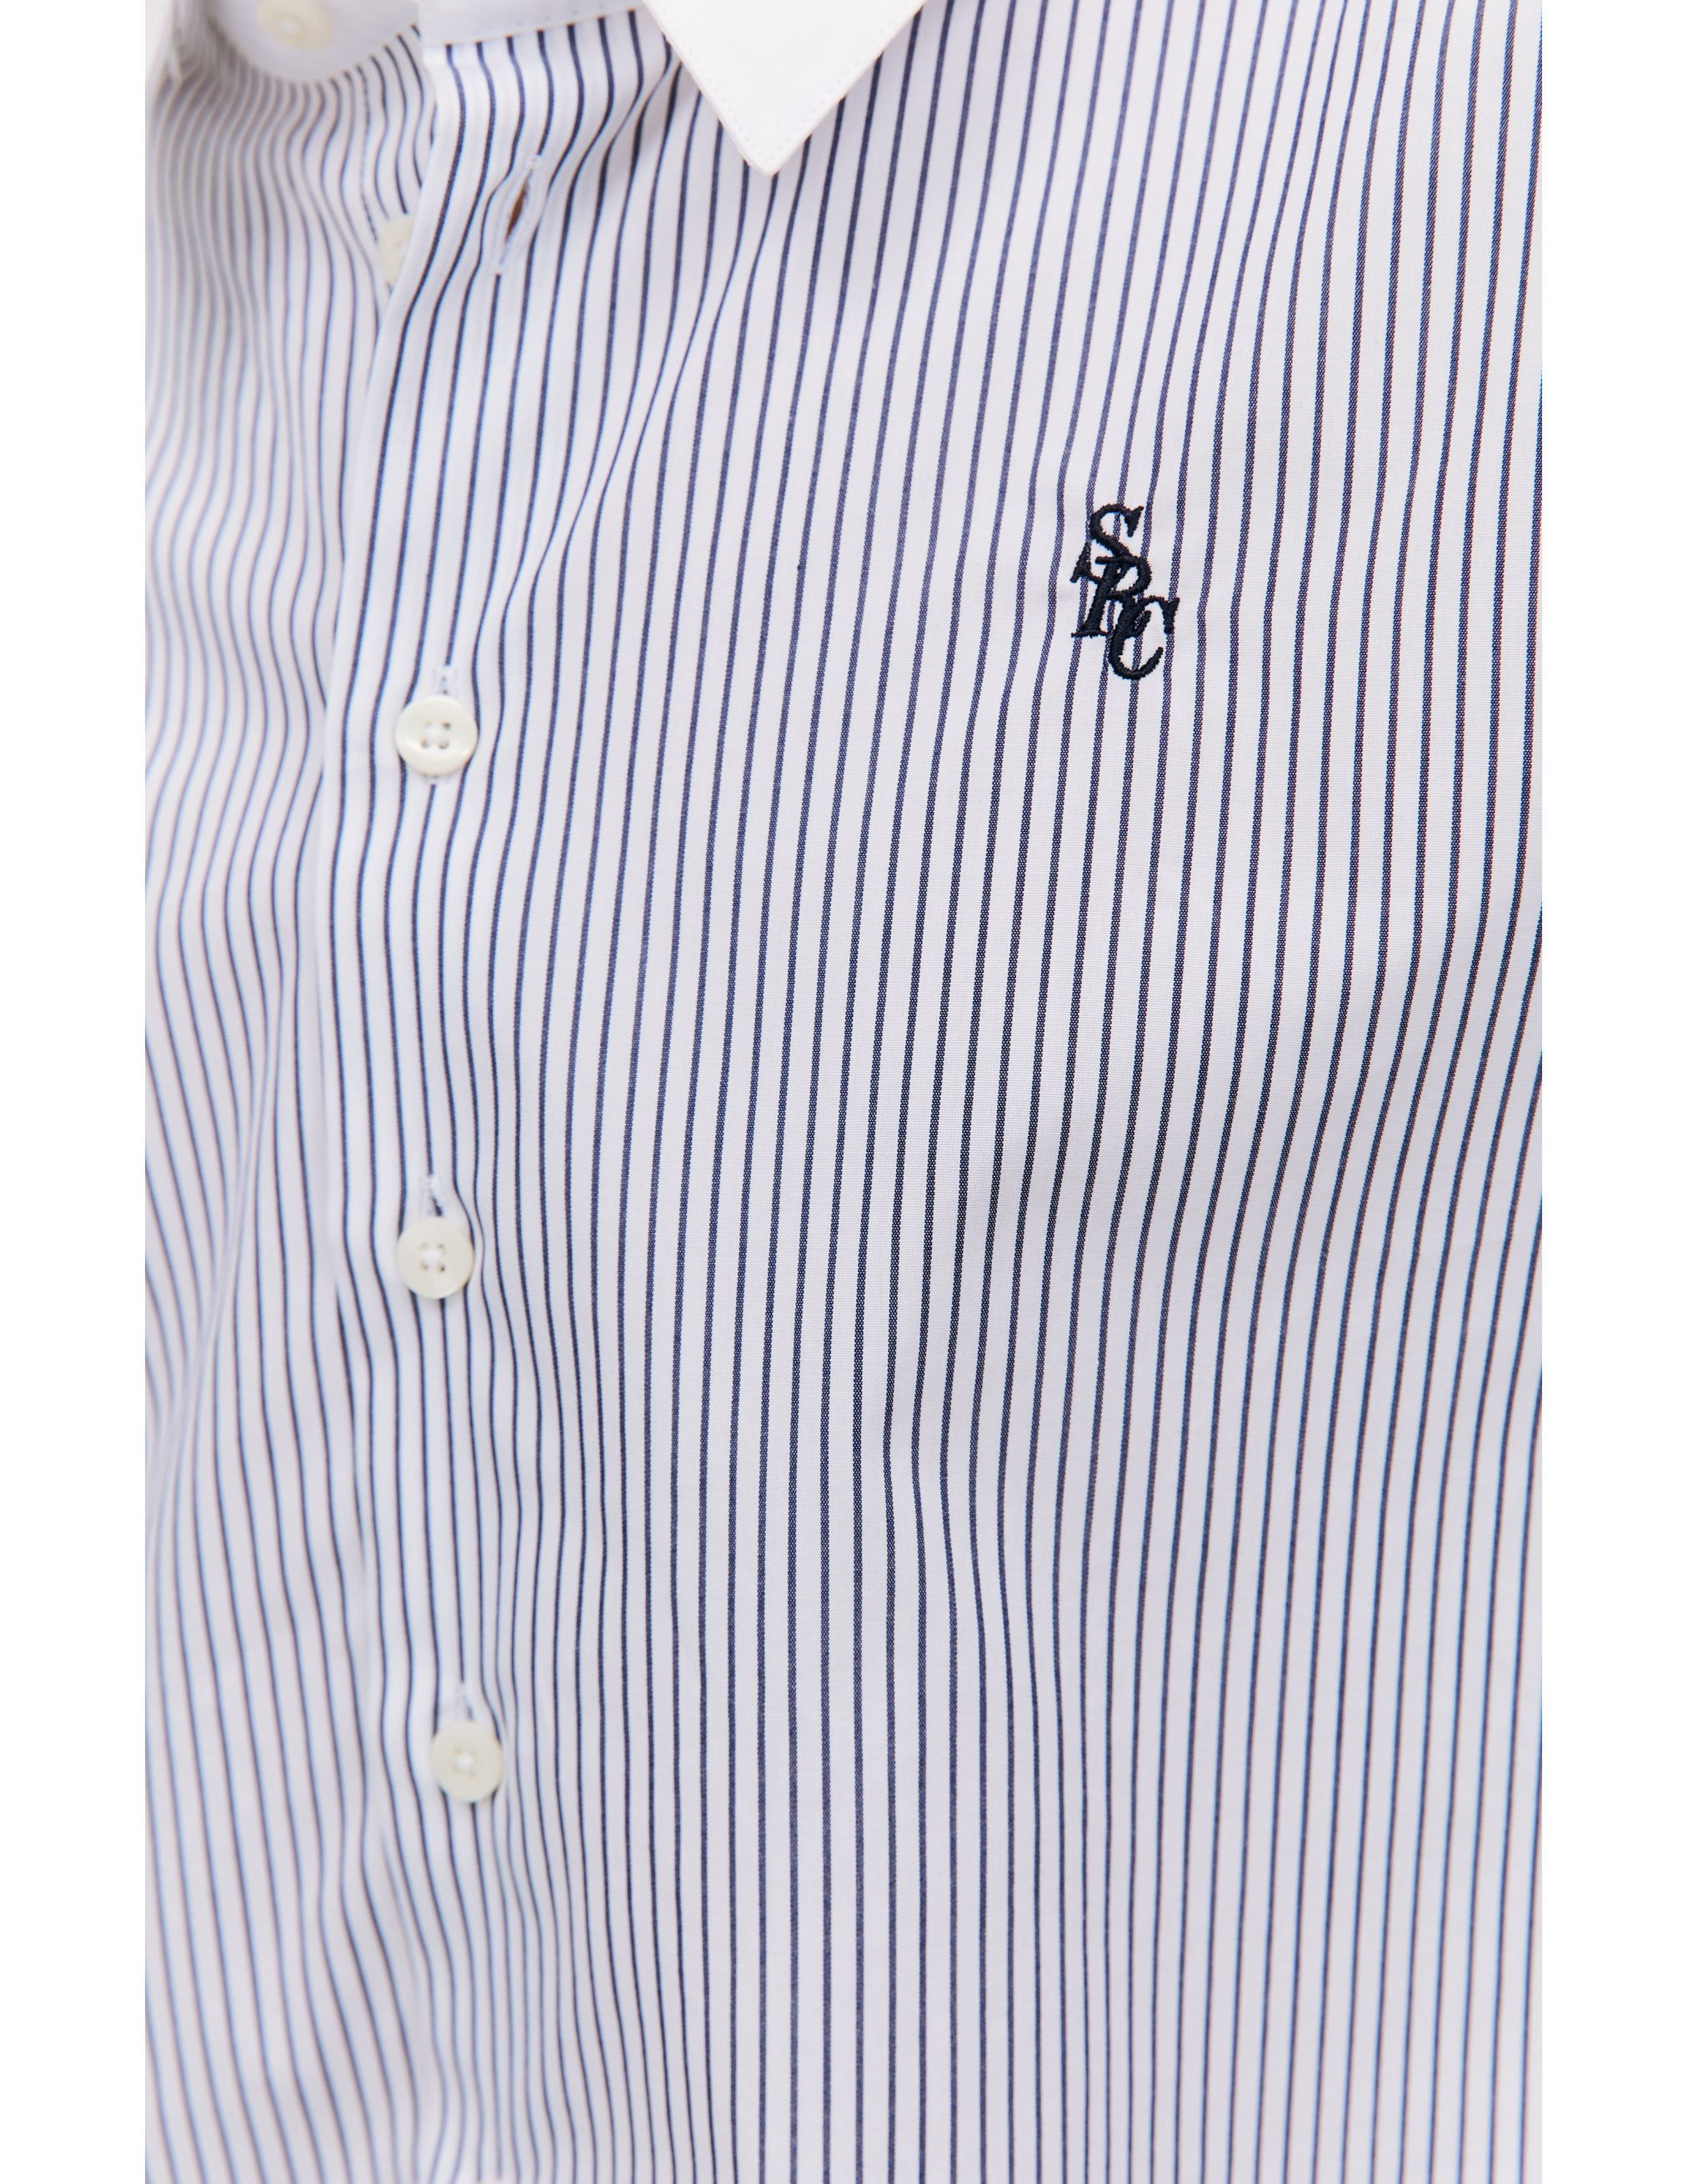 Укороченная рубашка в полоску SPORTY & RICH STAW2319NS, размер M;L;XL - фото 5